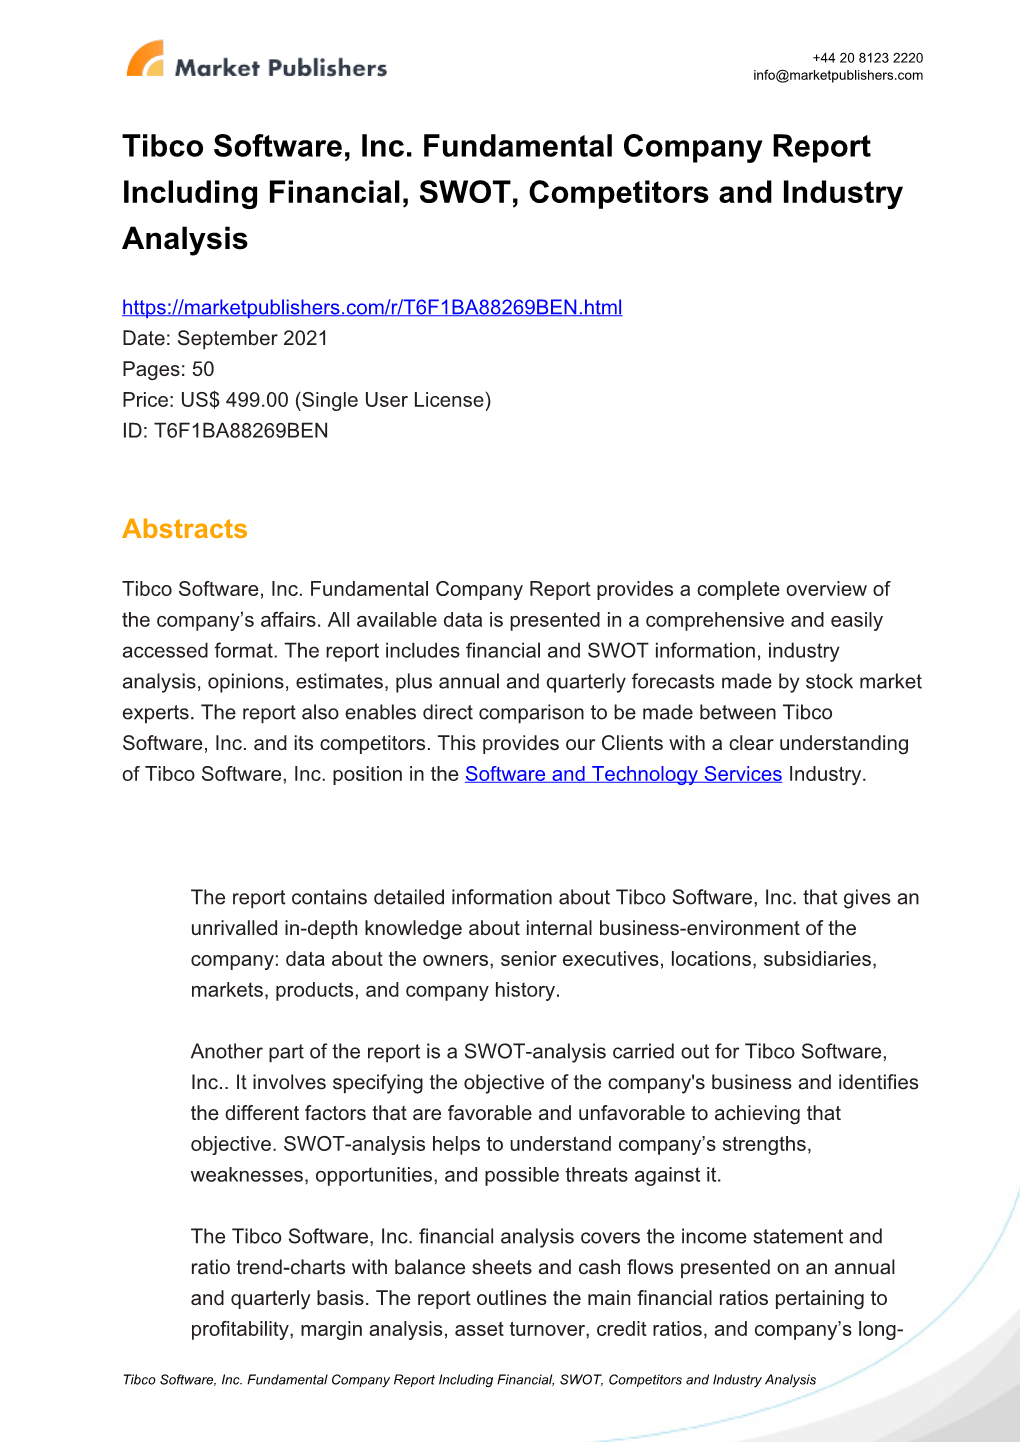 Tibco Software, Inc. Fundamental Company Report Including